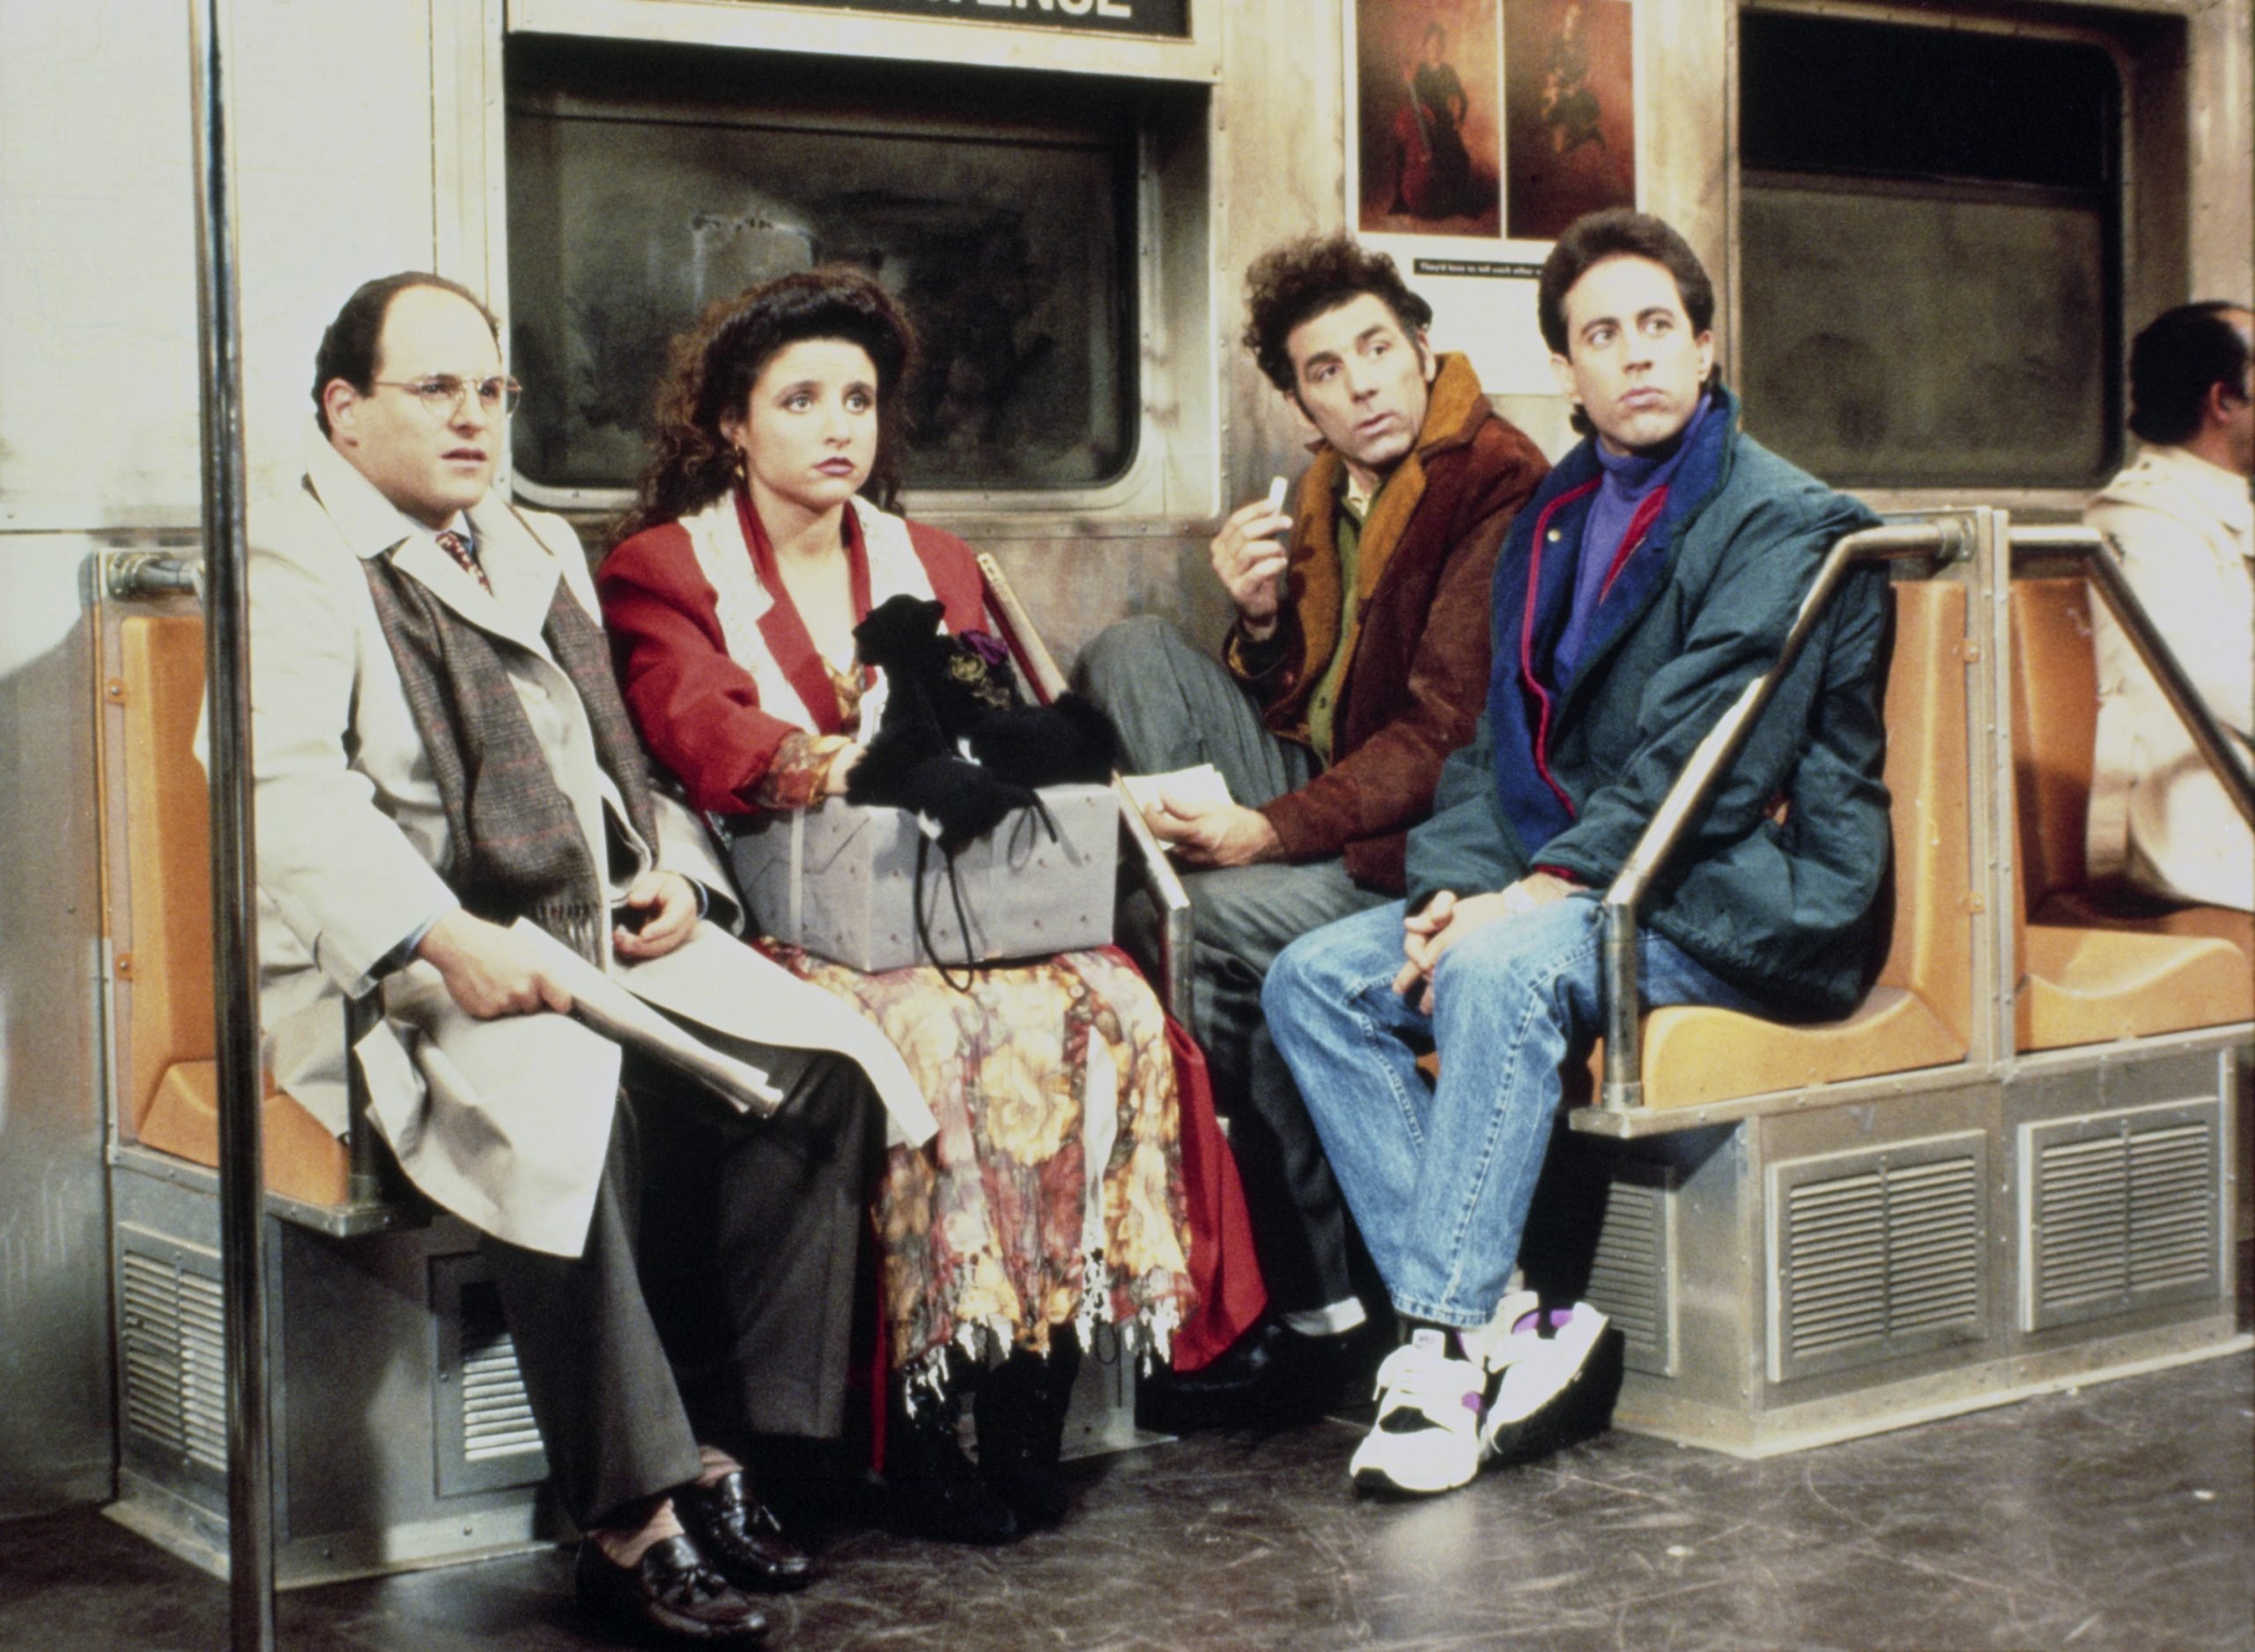 Best Seinfeld Episodes According To IMDb